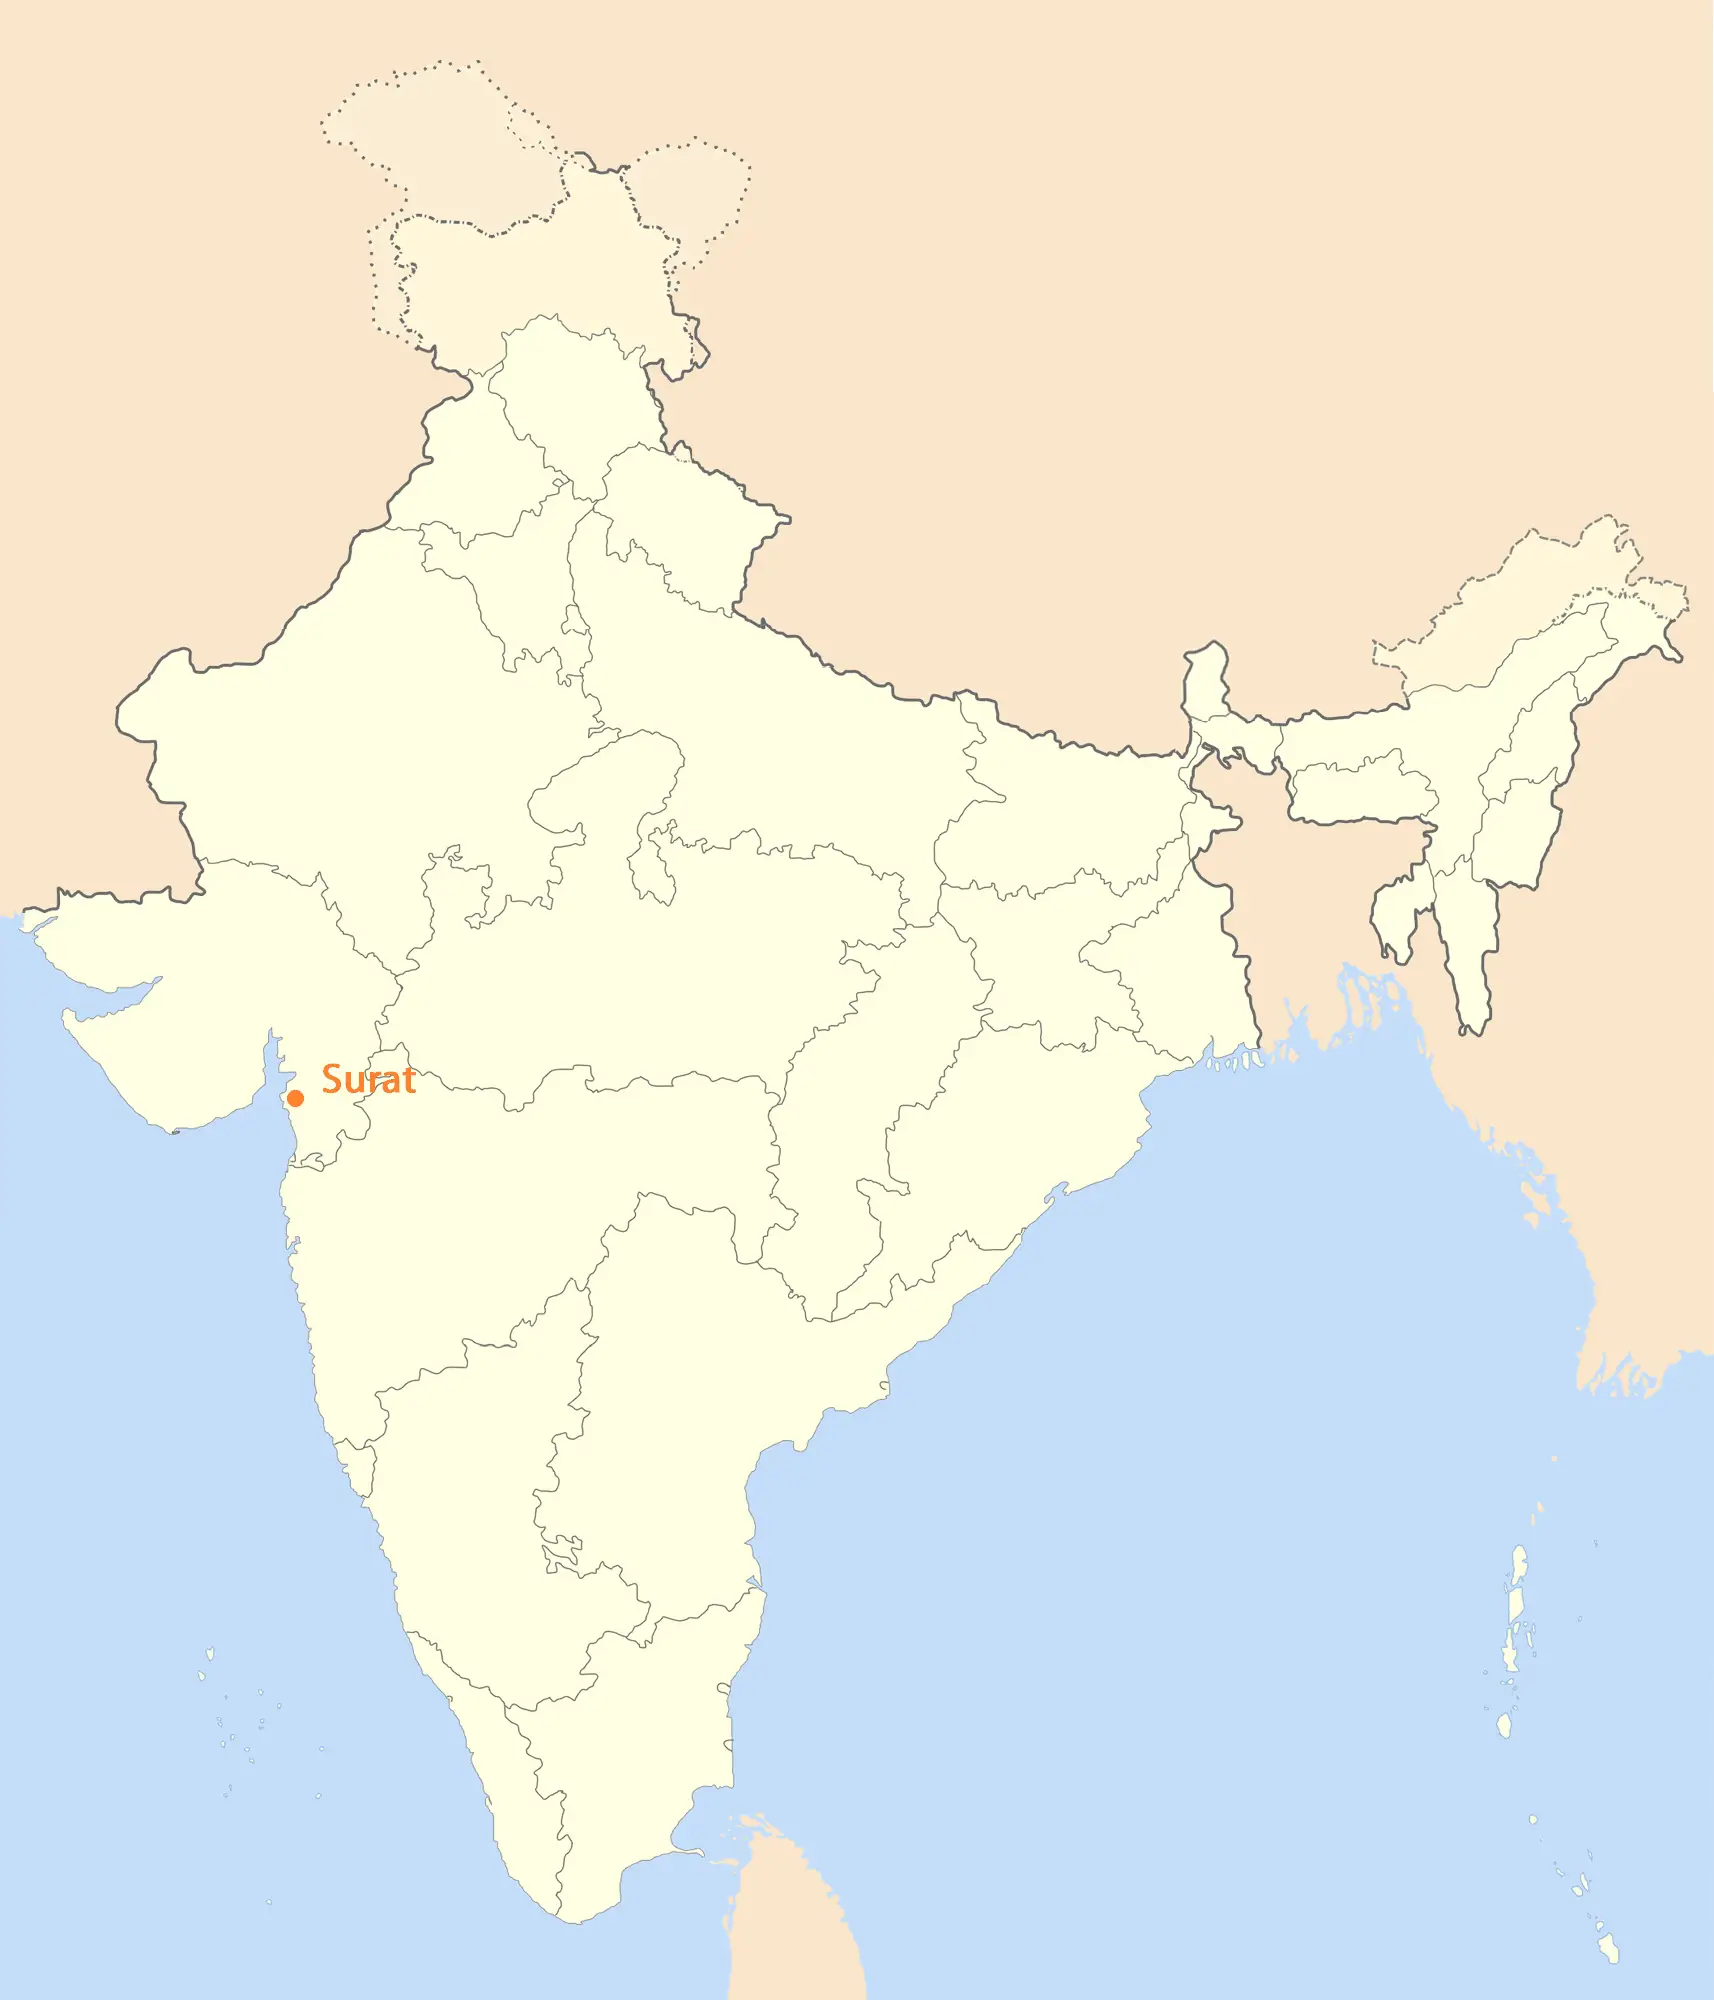 Location Map of Surat • Mapsof.net